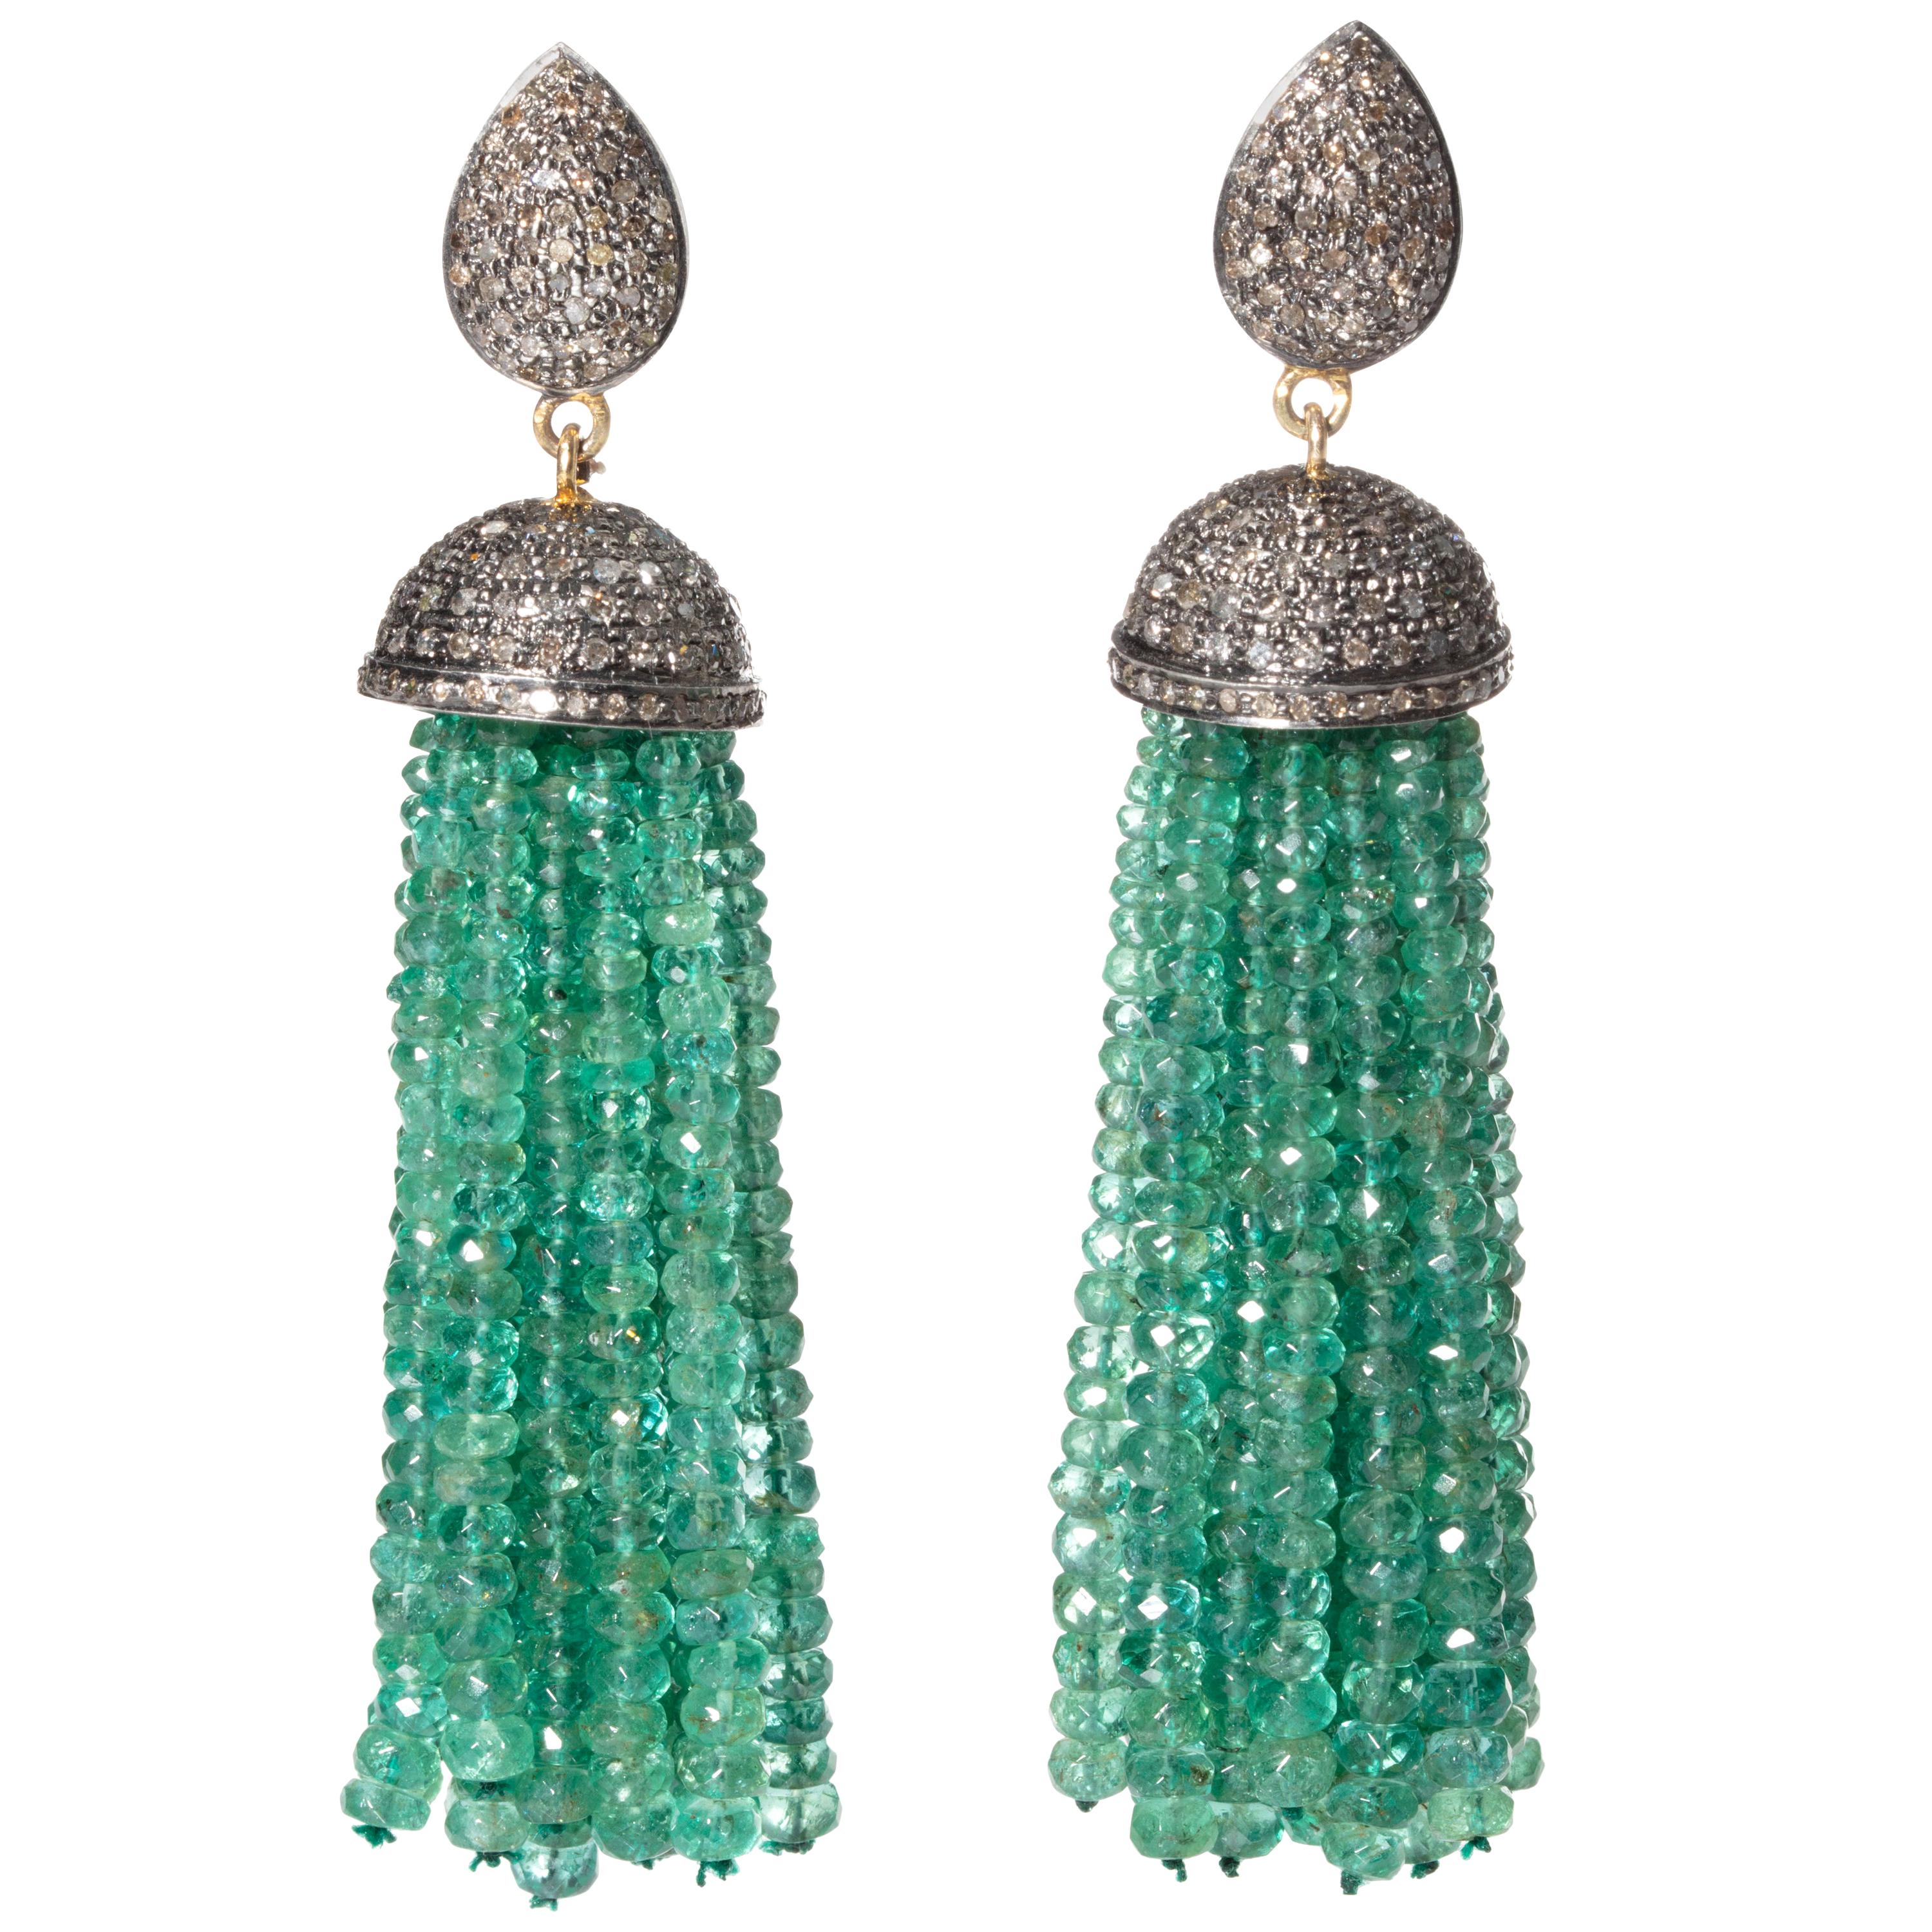 Pair of Emerald and Diamond Tassel Earrings